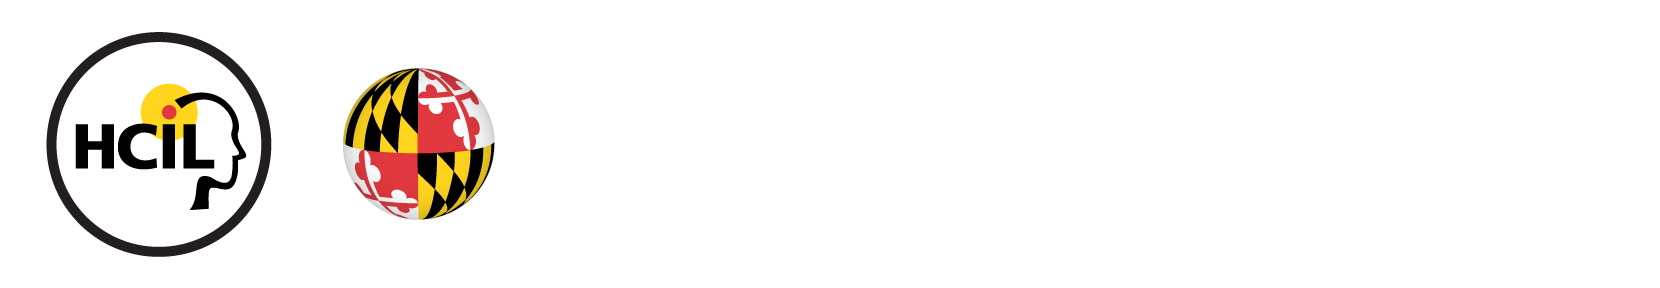 Human-Computer Interaction Lab